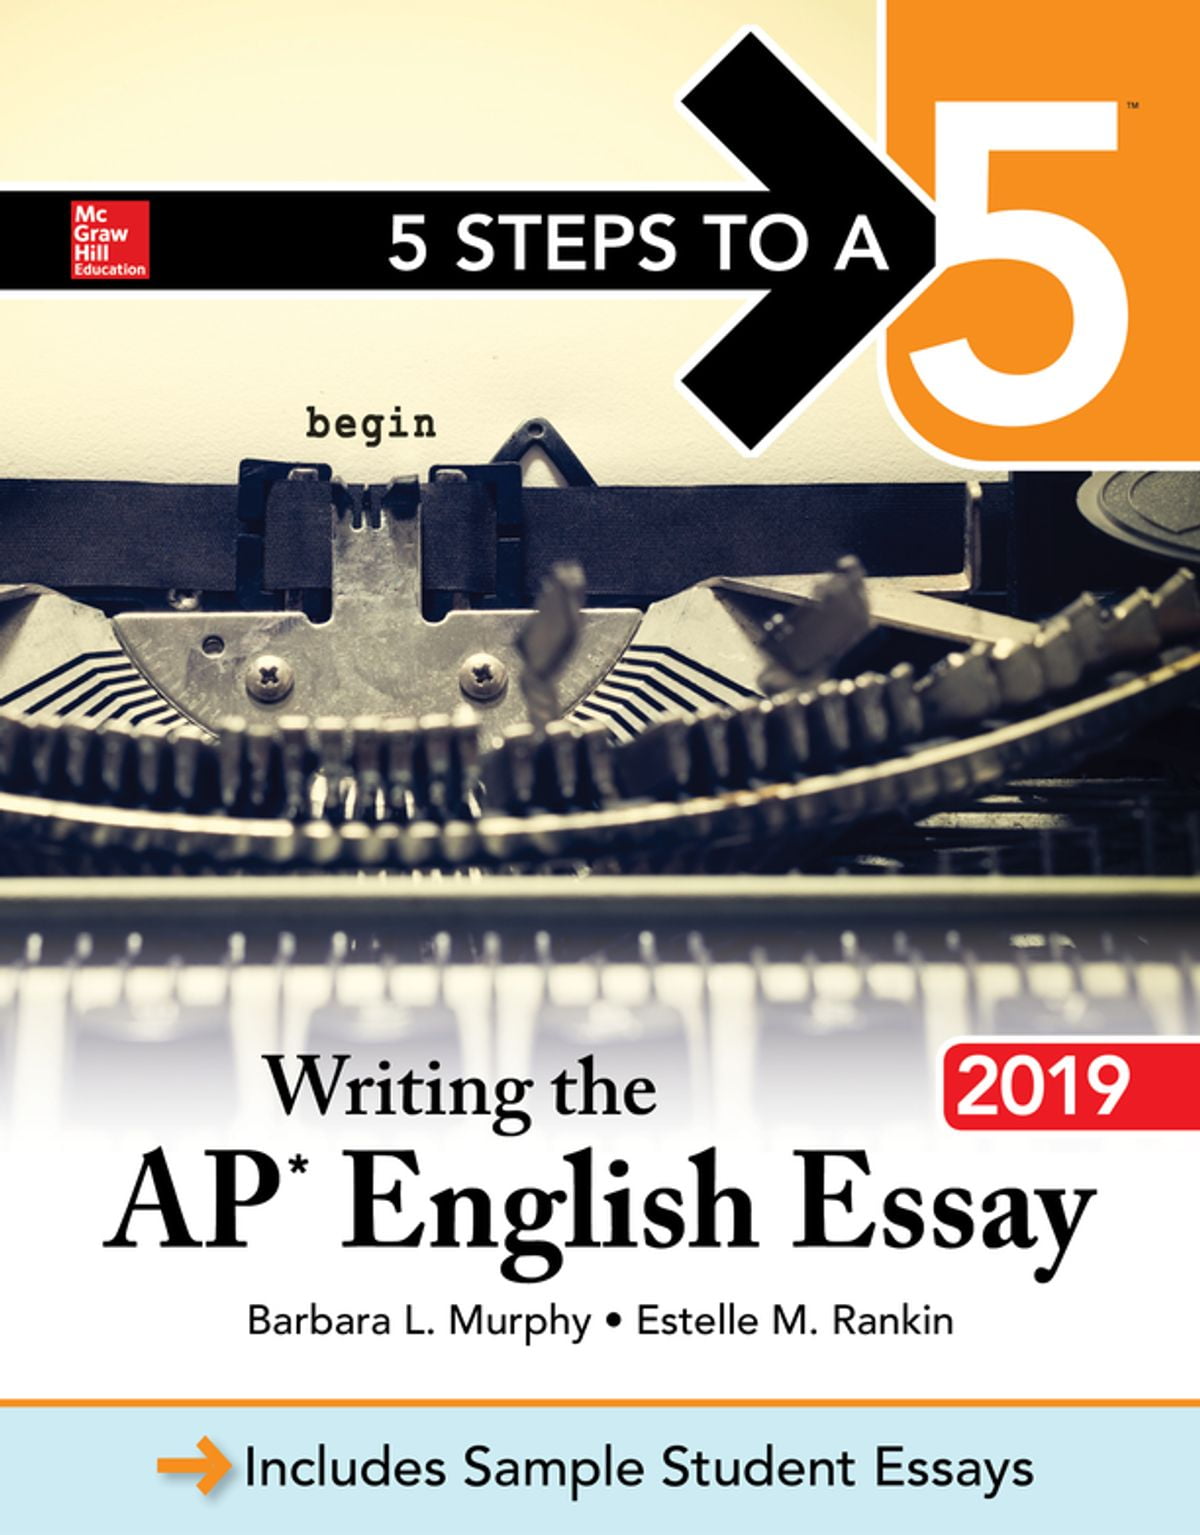 ap english steps to writing an essay